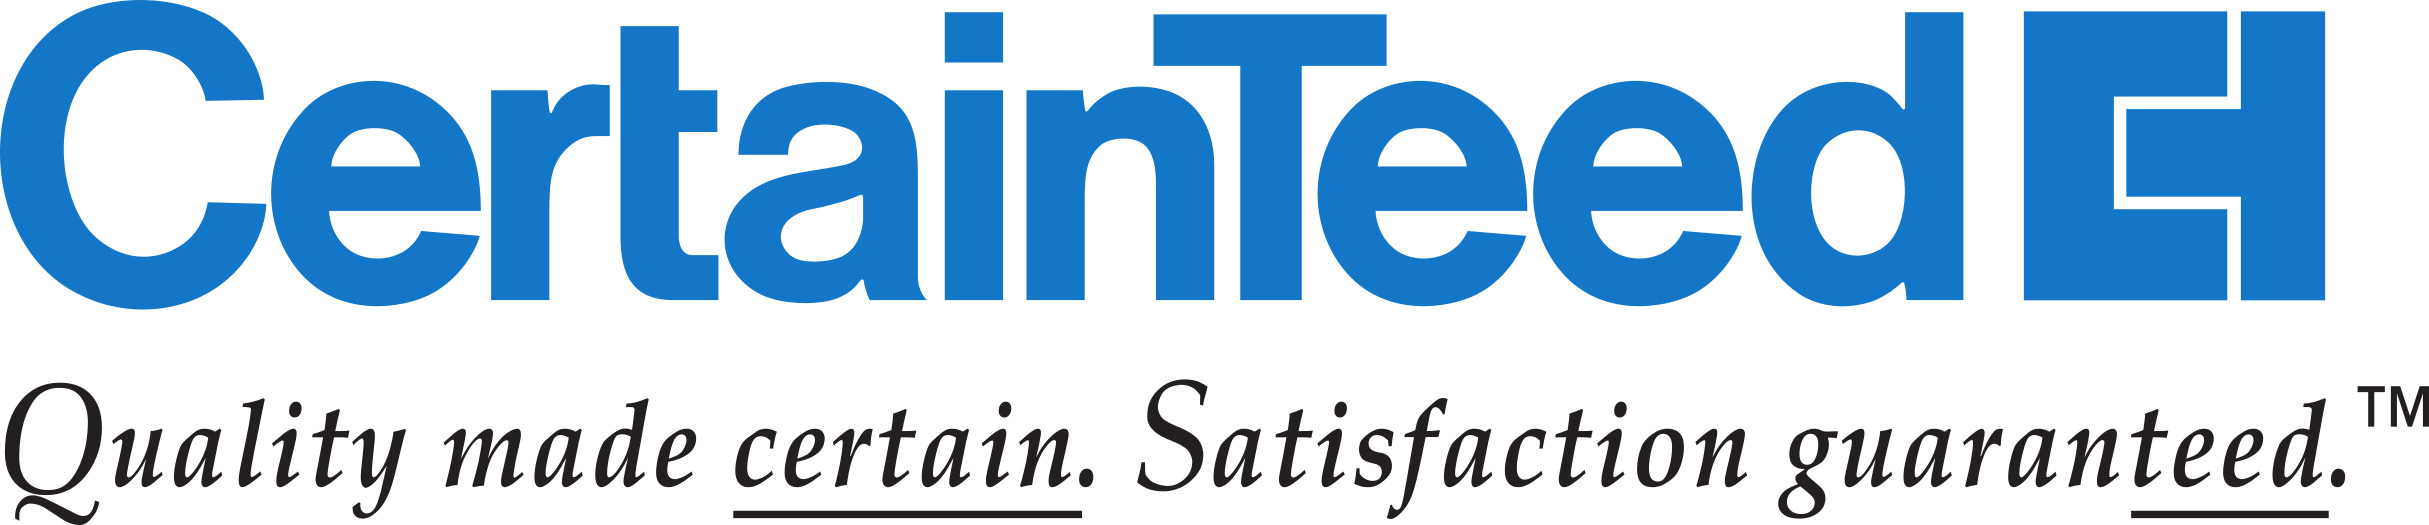 CertainTeed-Logo